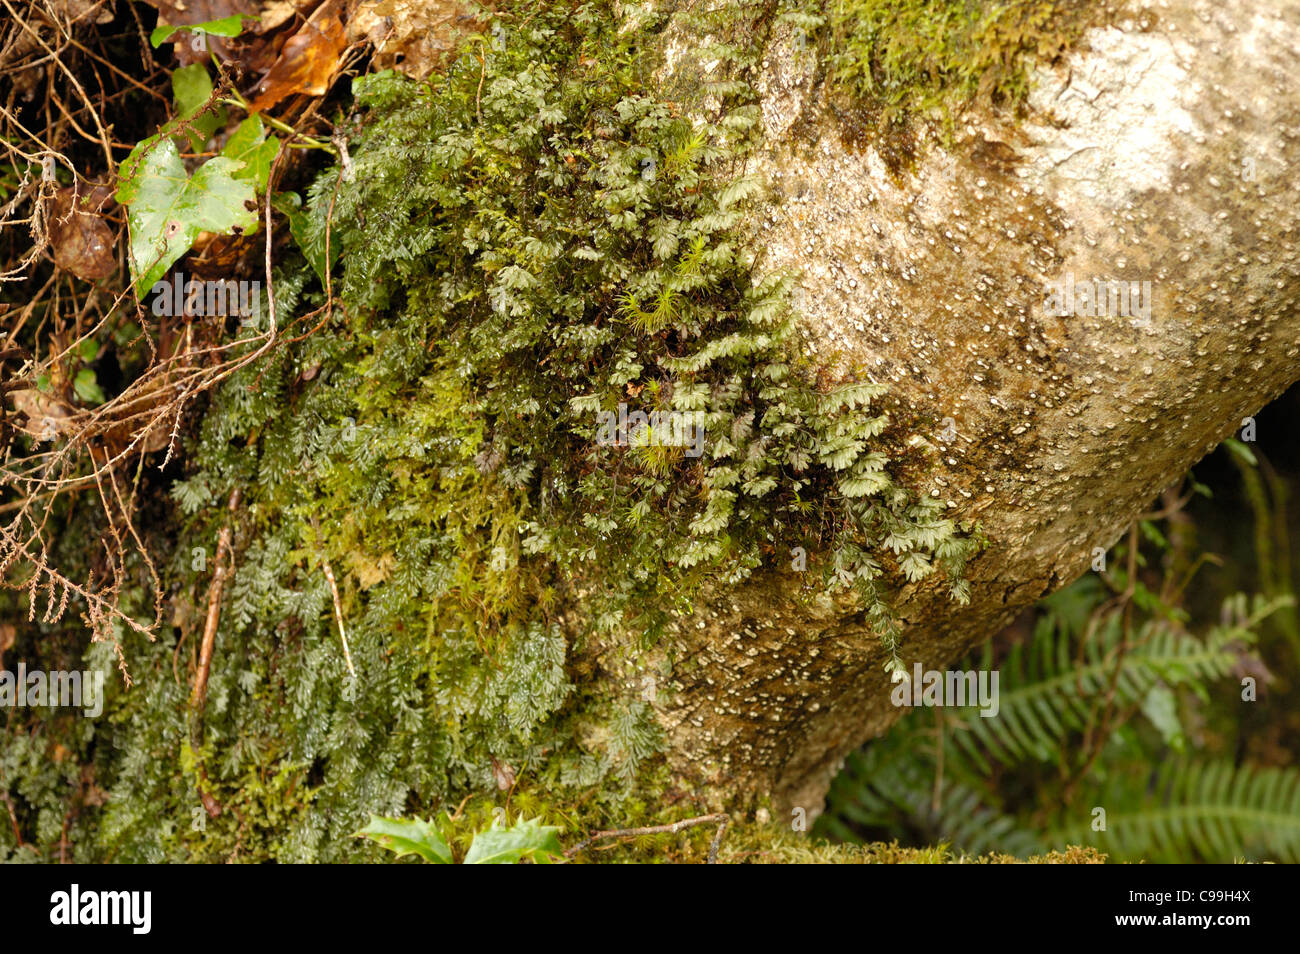 Wilson's Filmy-fern, Hymenophyllum wilsonii and Tunbridge Filmy-fern, H. tunbrigense growing together on a tree trunk Stock Photo